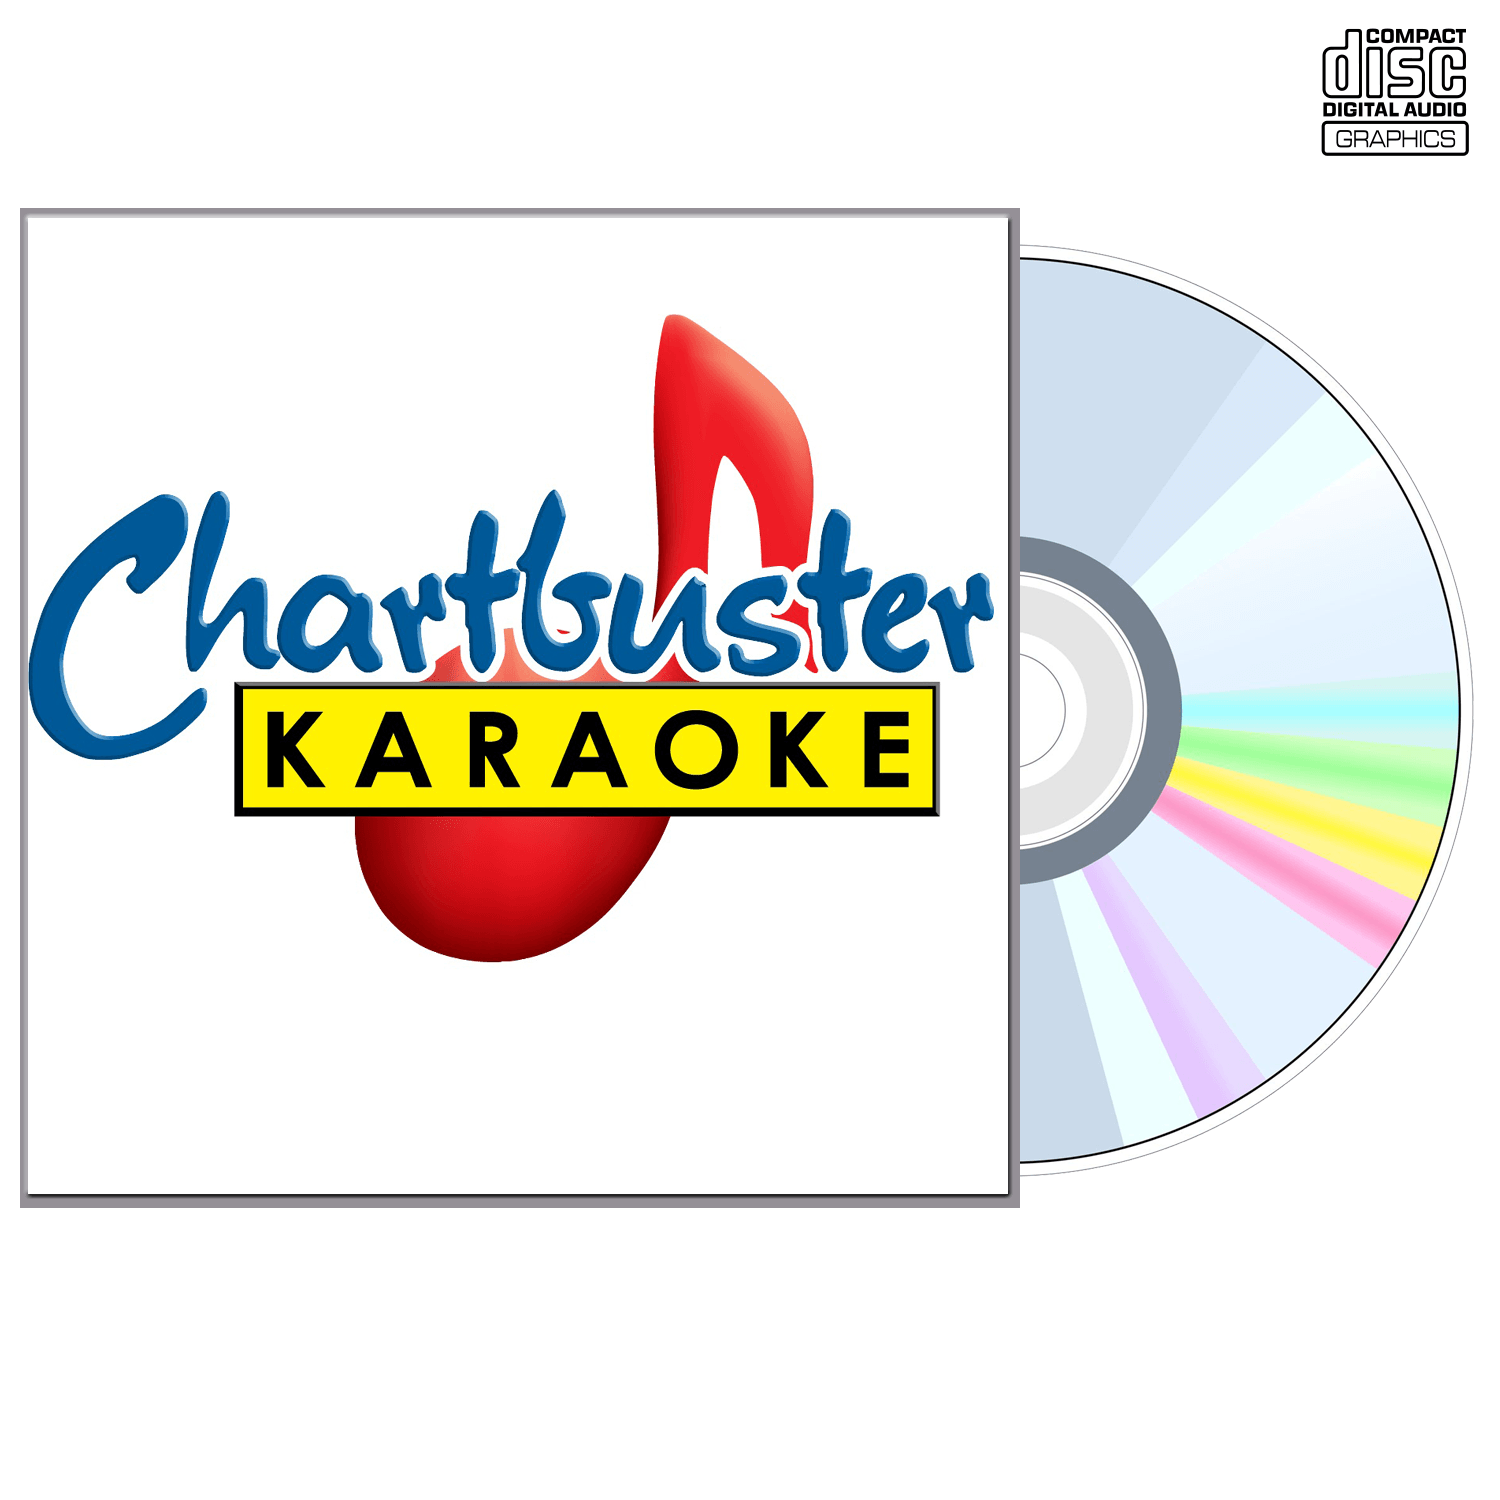 Bluegrass Album Band - CD+G - Chartbuster Karaoke - Karaoke Home Entertainment